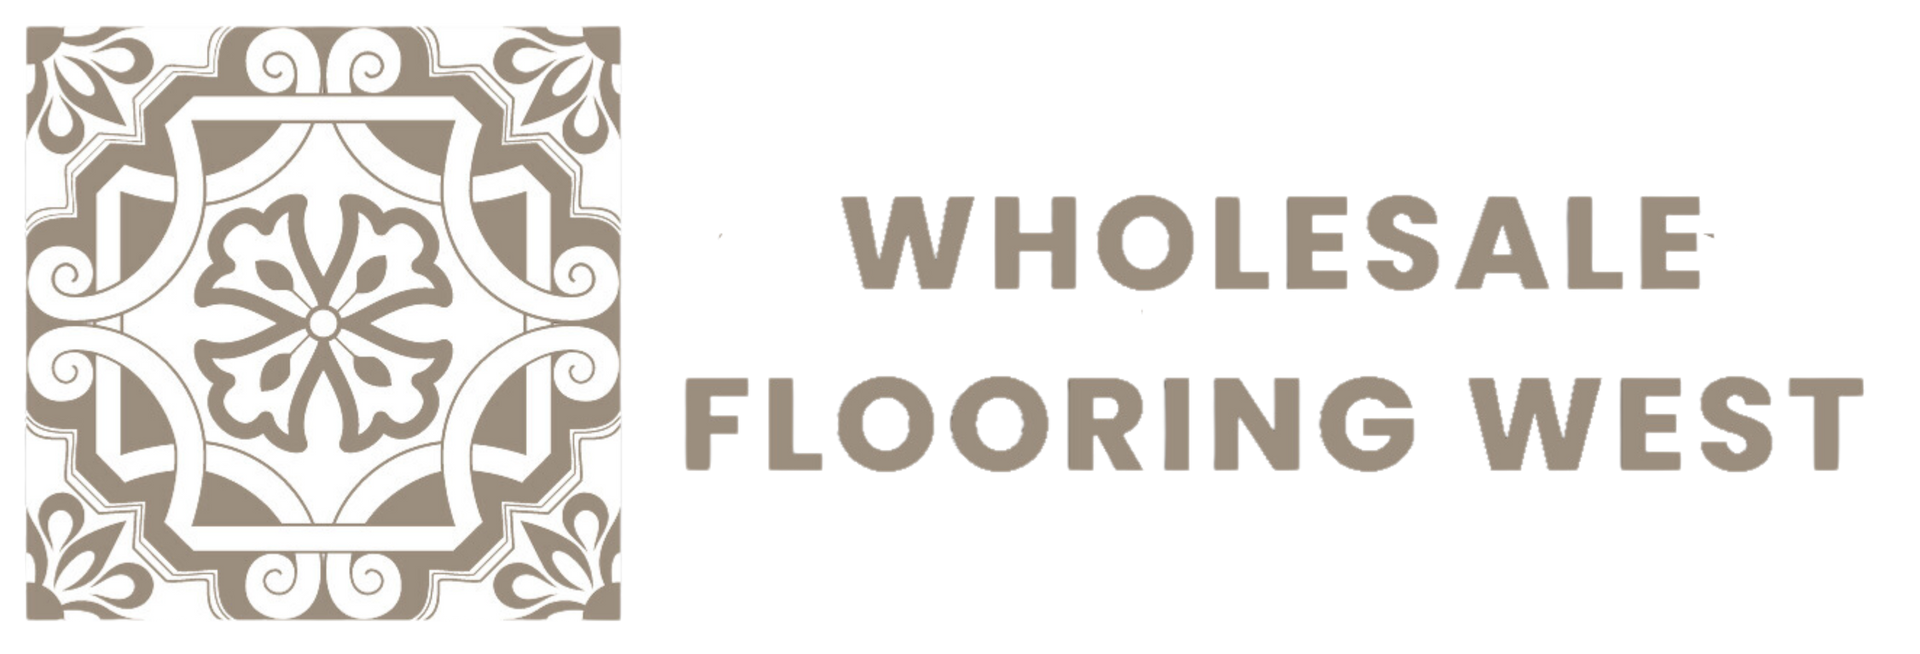 Wholesale Flooring West logo